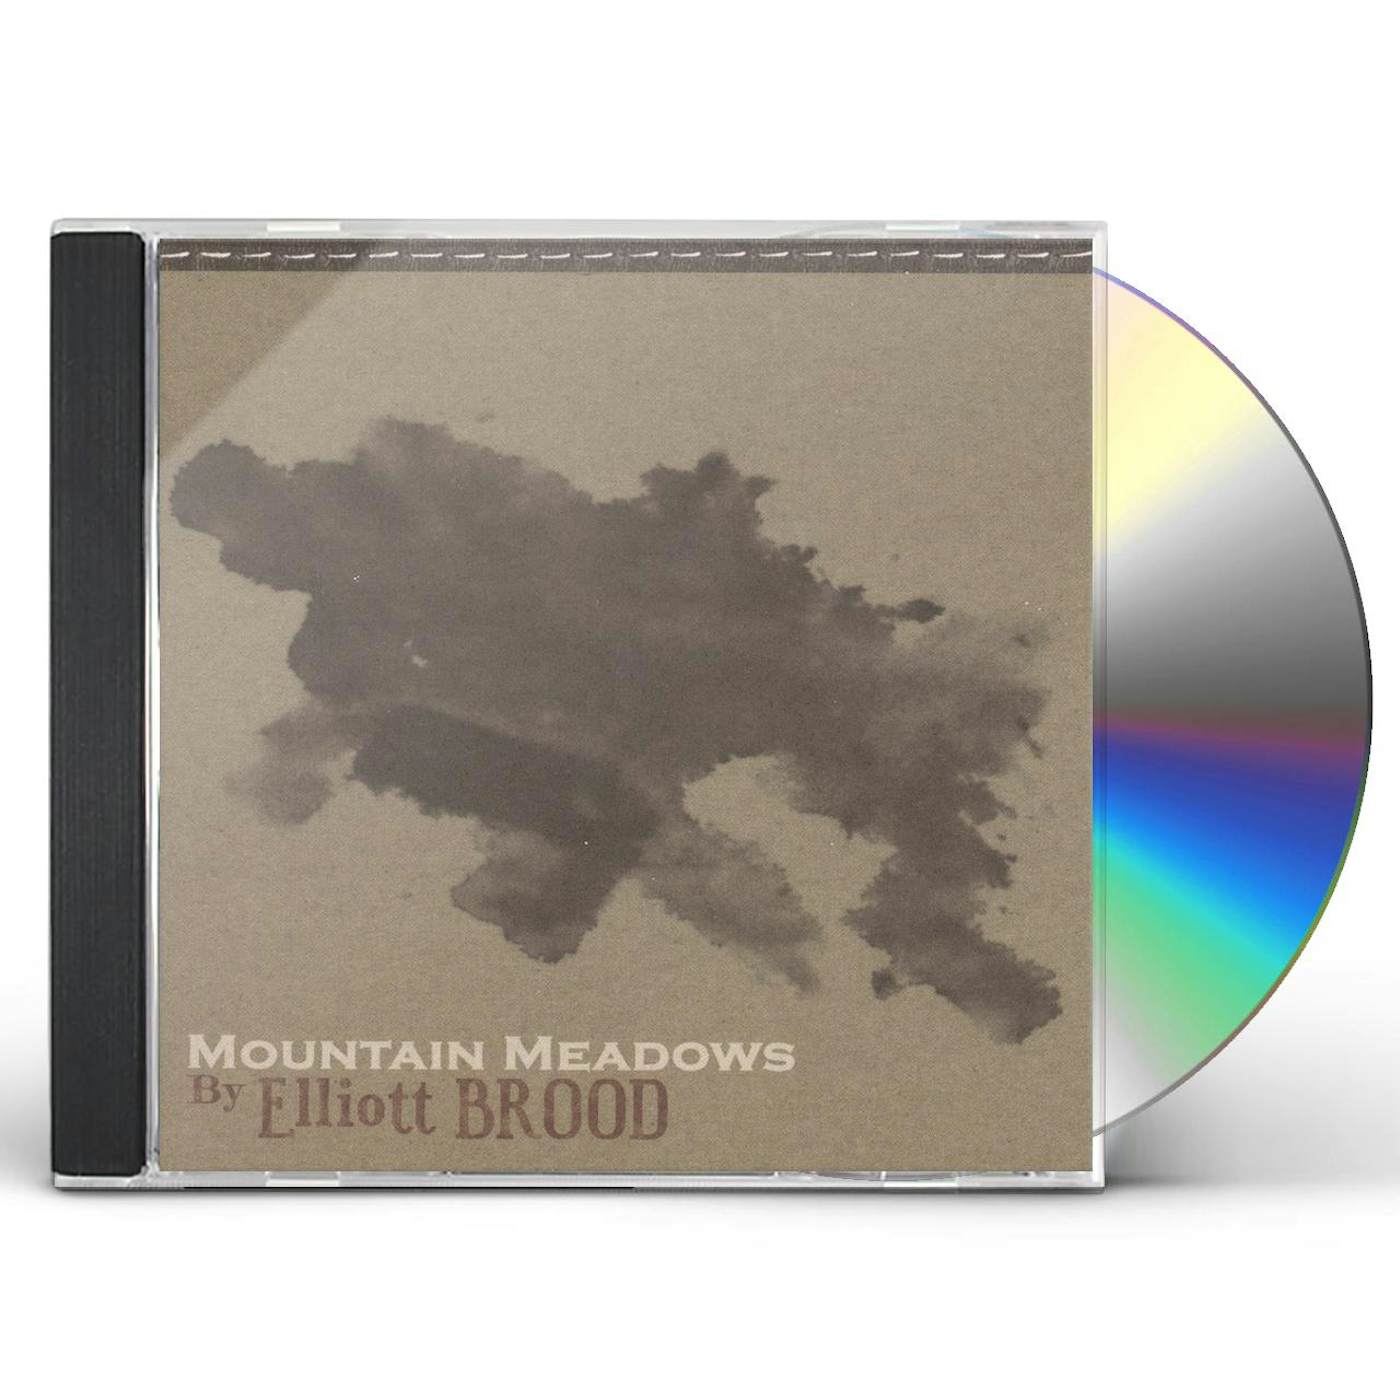 Elliott BROOD MOUNTAIN MEADOWS CD